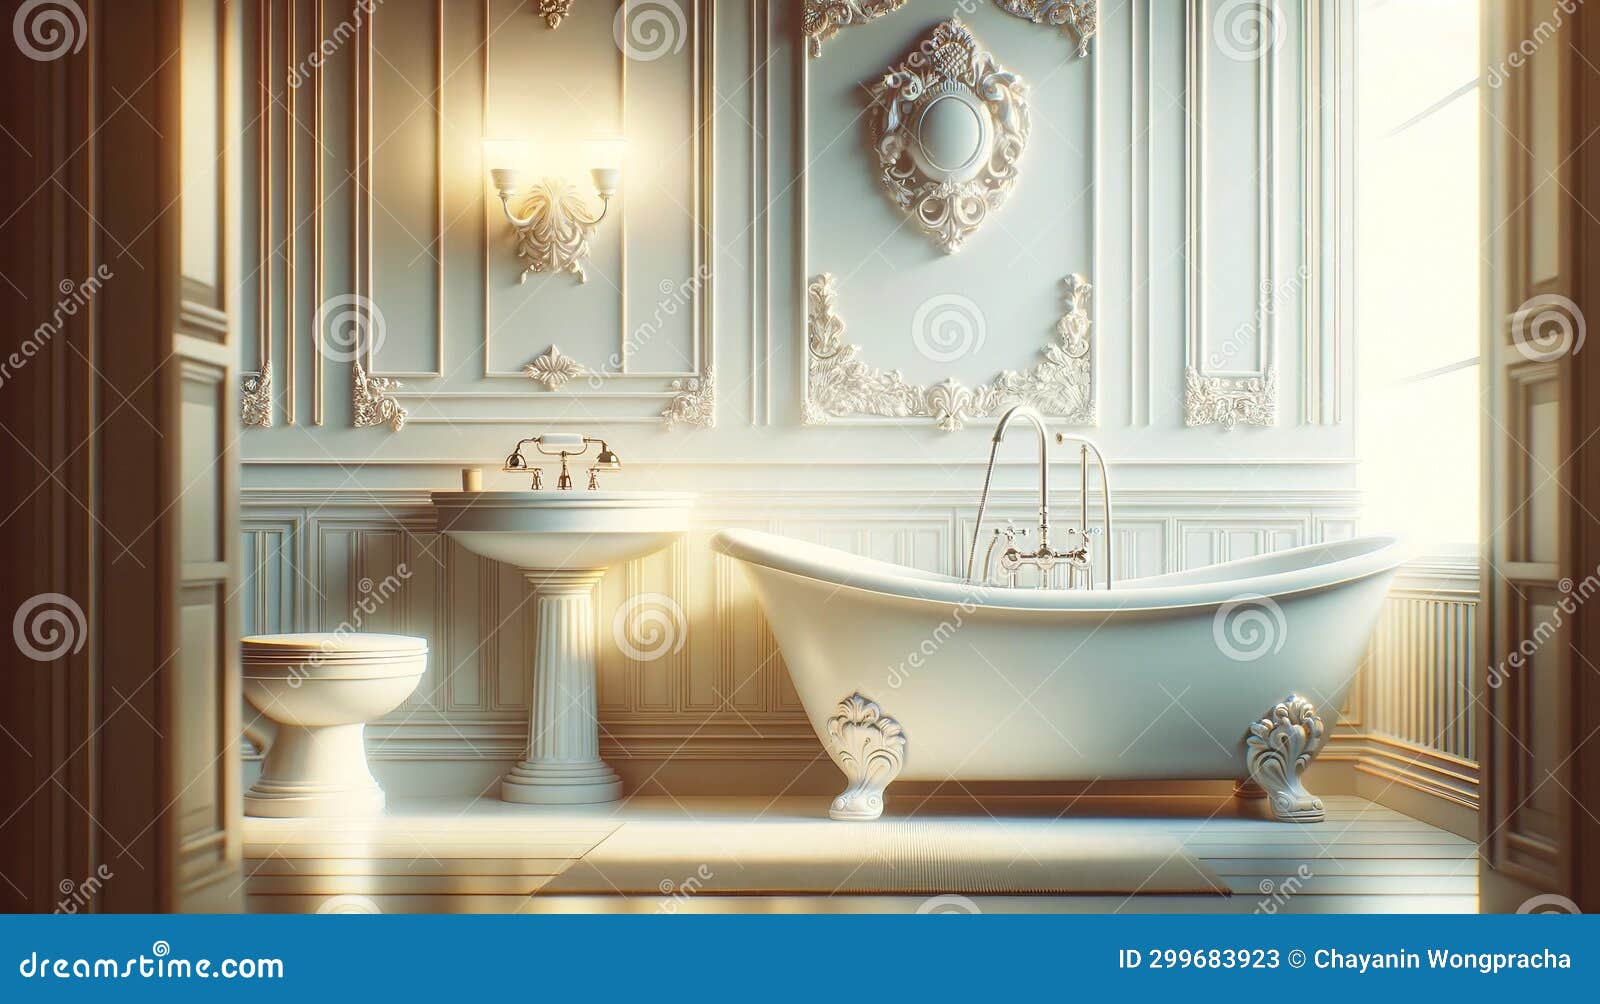 Lavish Bathroom Interior Dominated by Elegant Whites. the Centerpiece ...